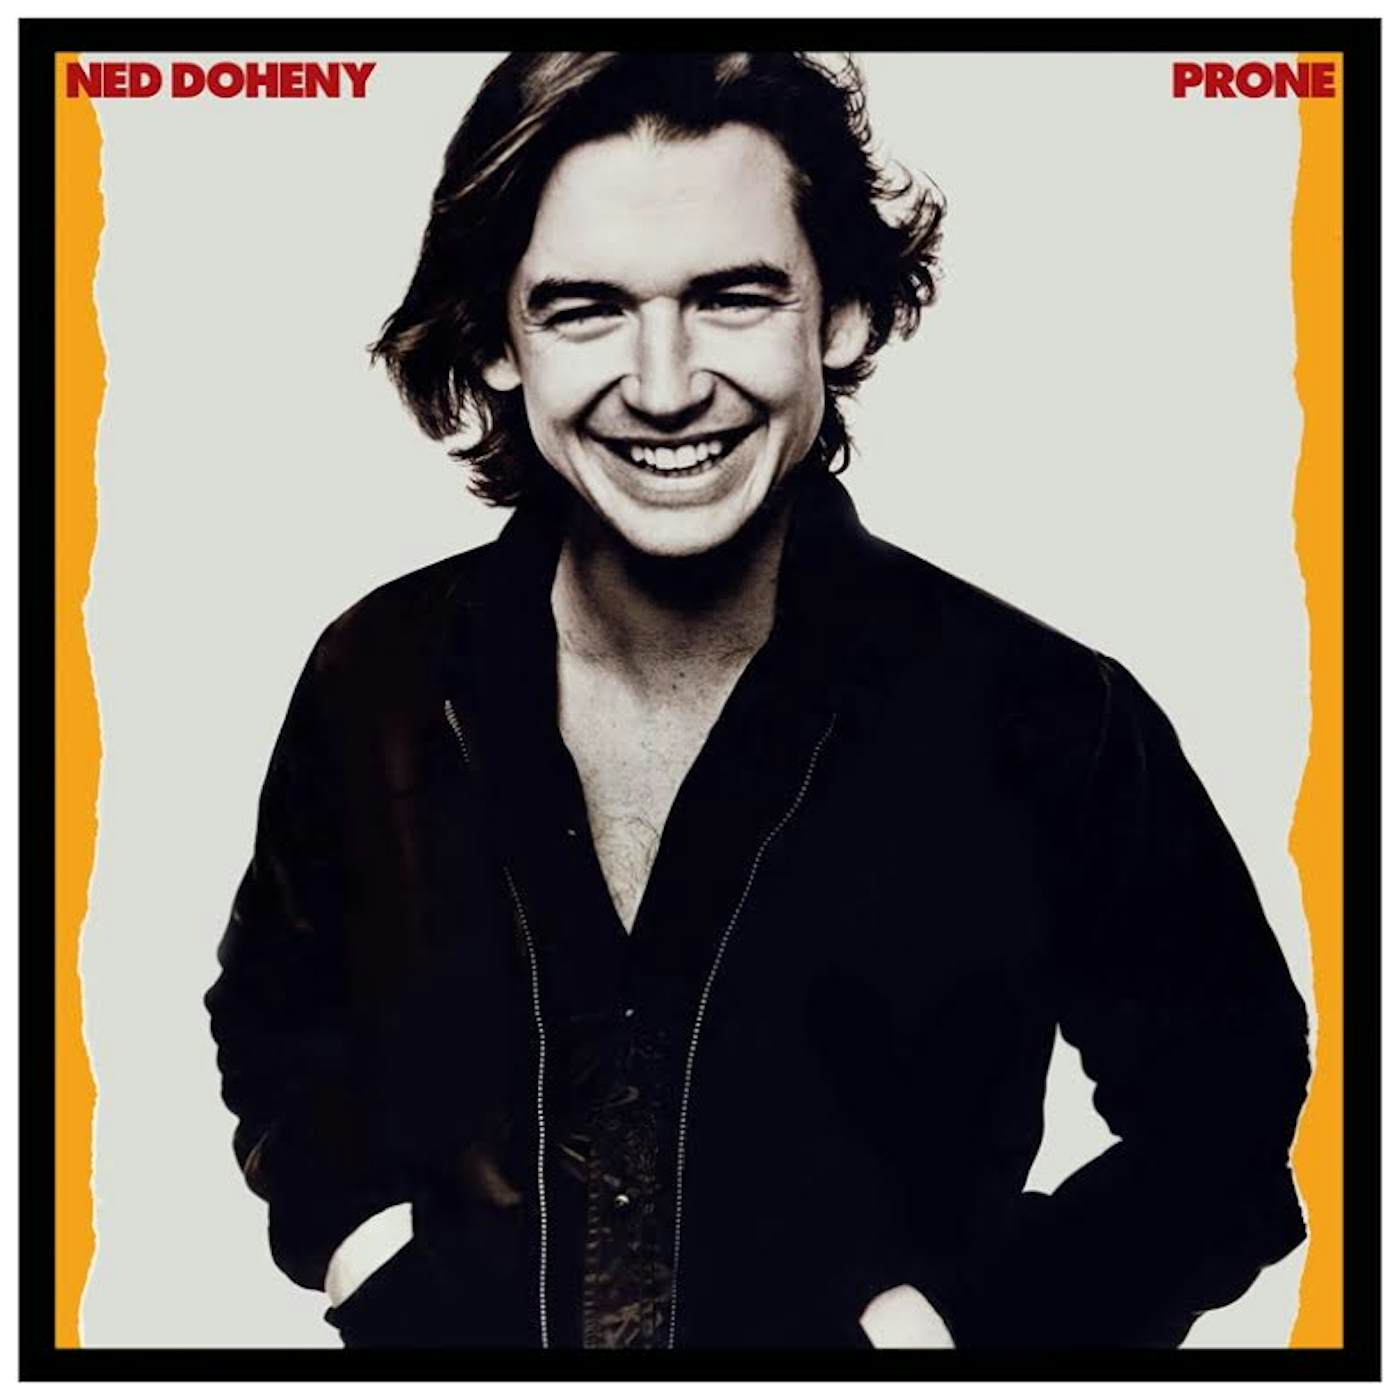 Ned Doheny Prone Vinyl Record